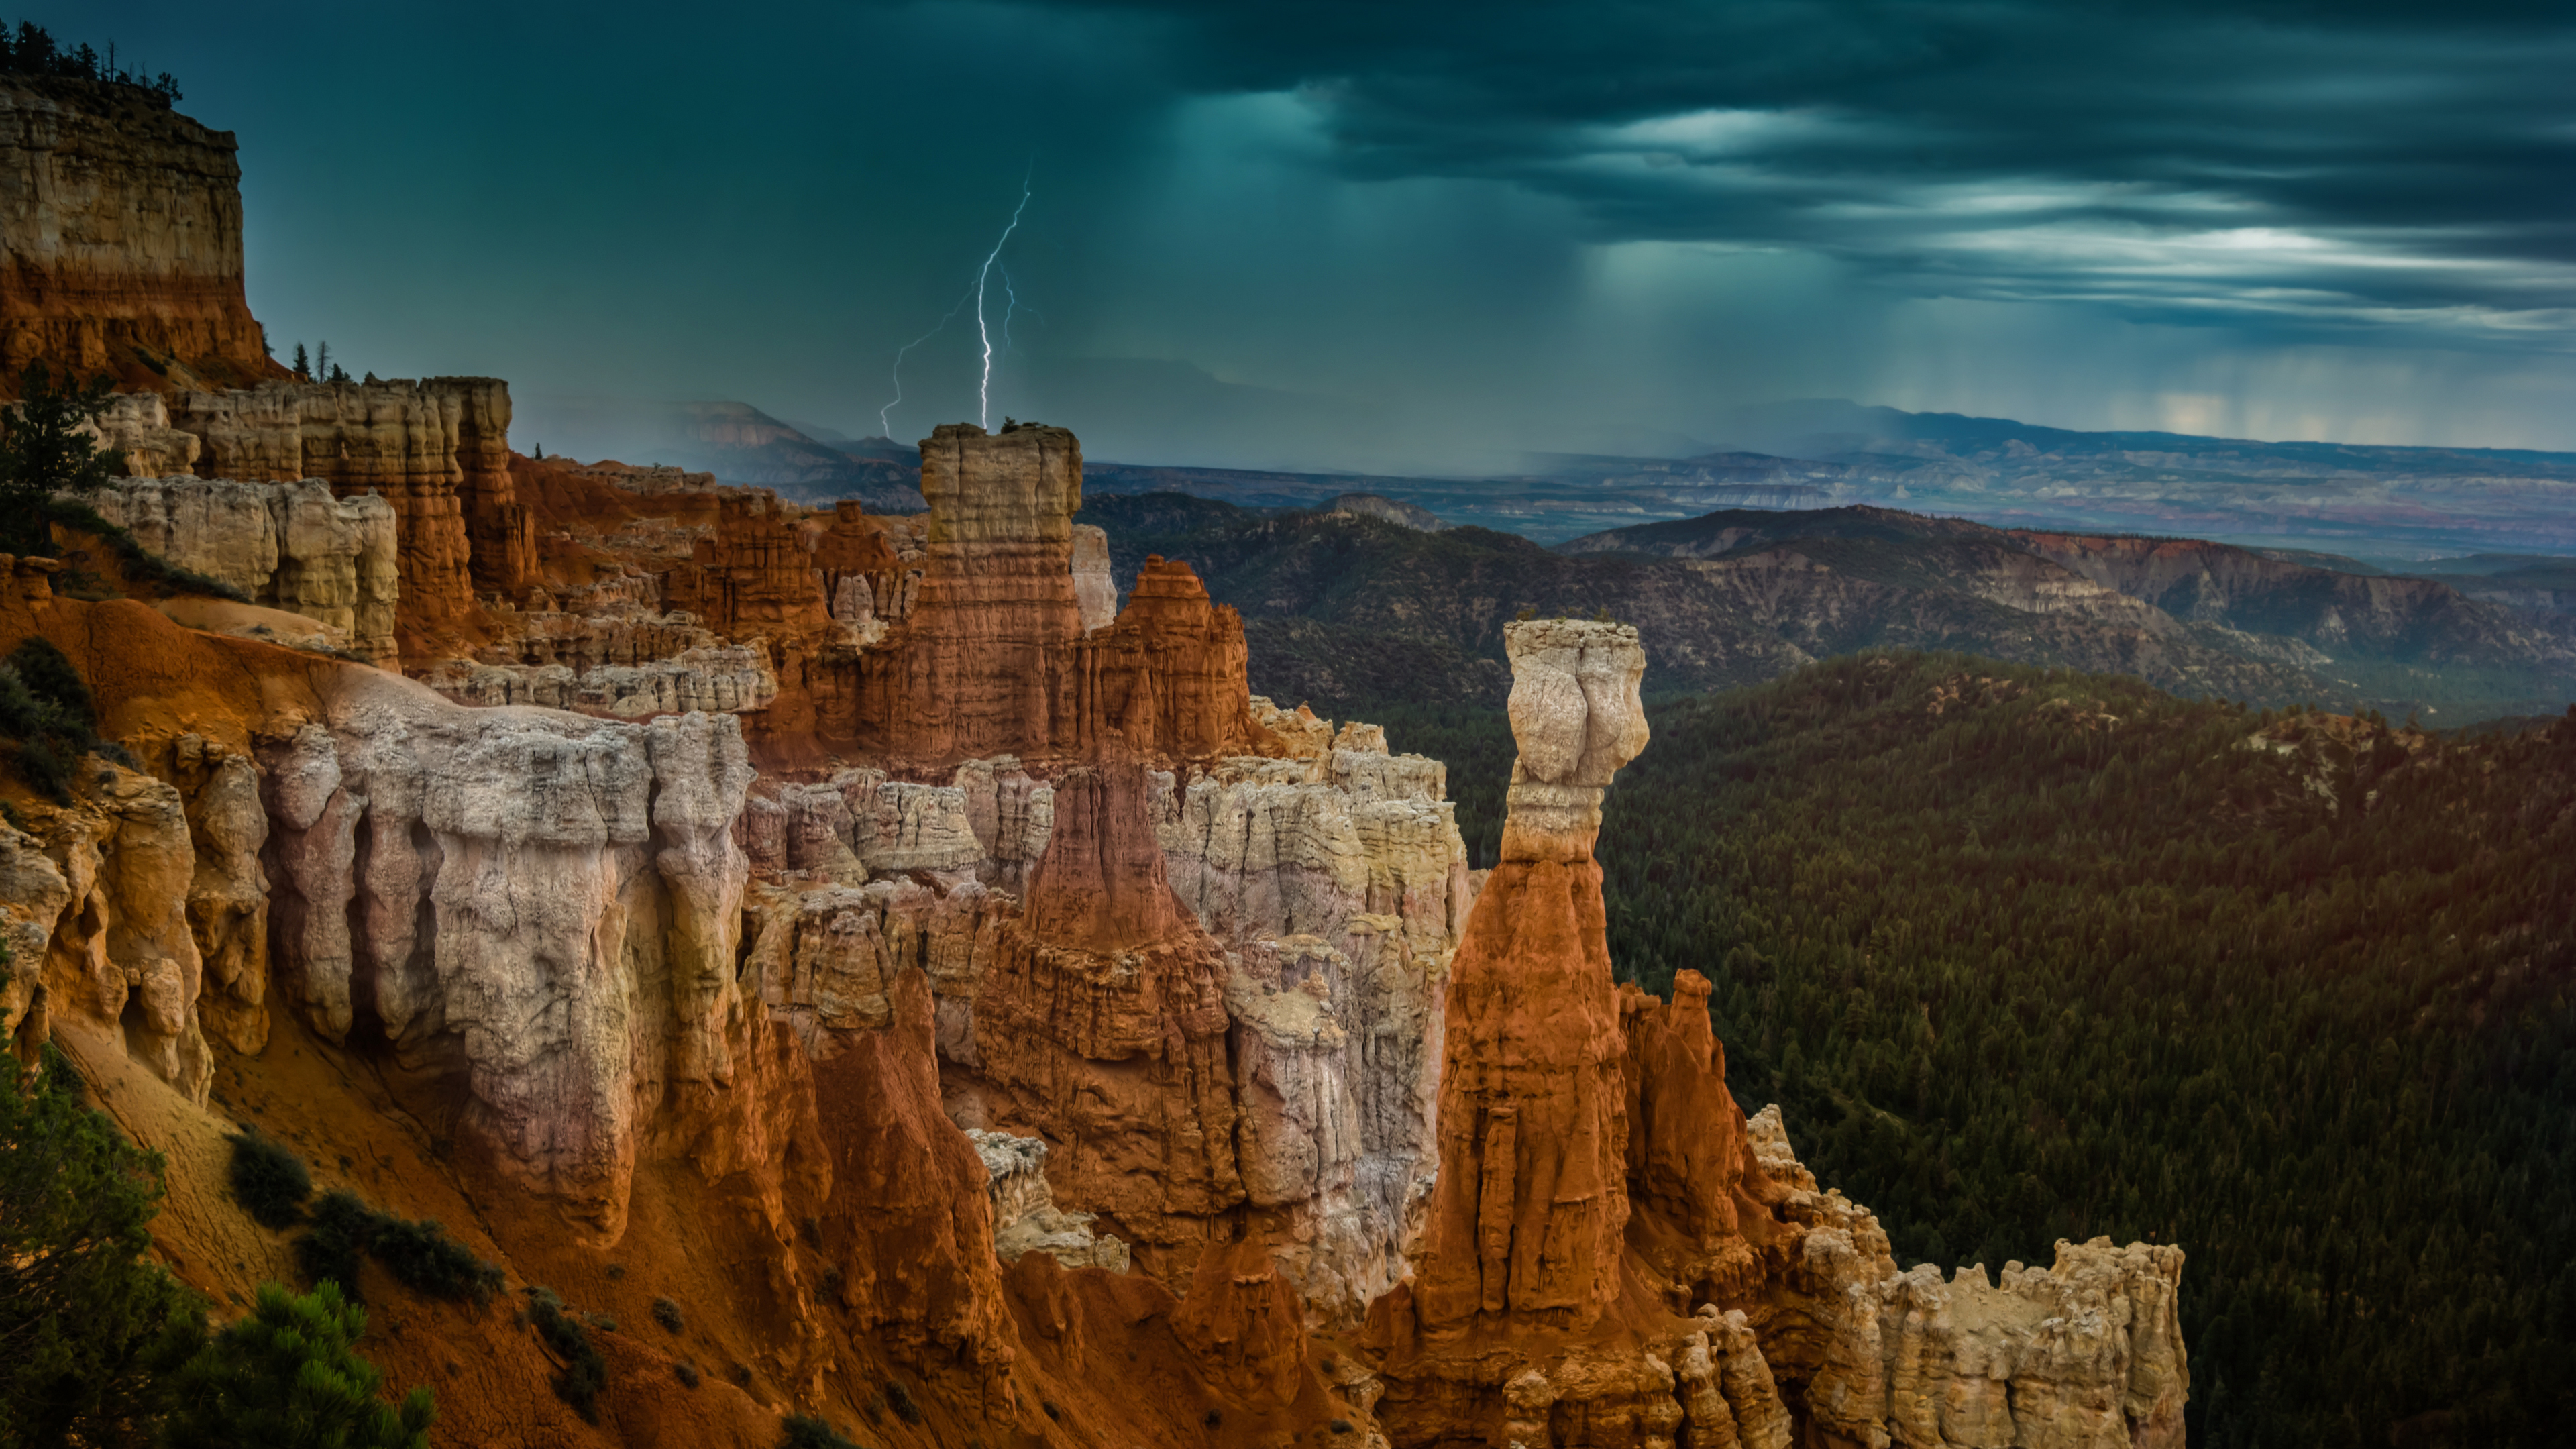 General 3840x2160 Trey Ratcliff photography landscape rocks mountains sky clouds lightning storm Utah USA nature